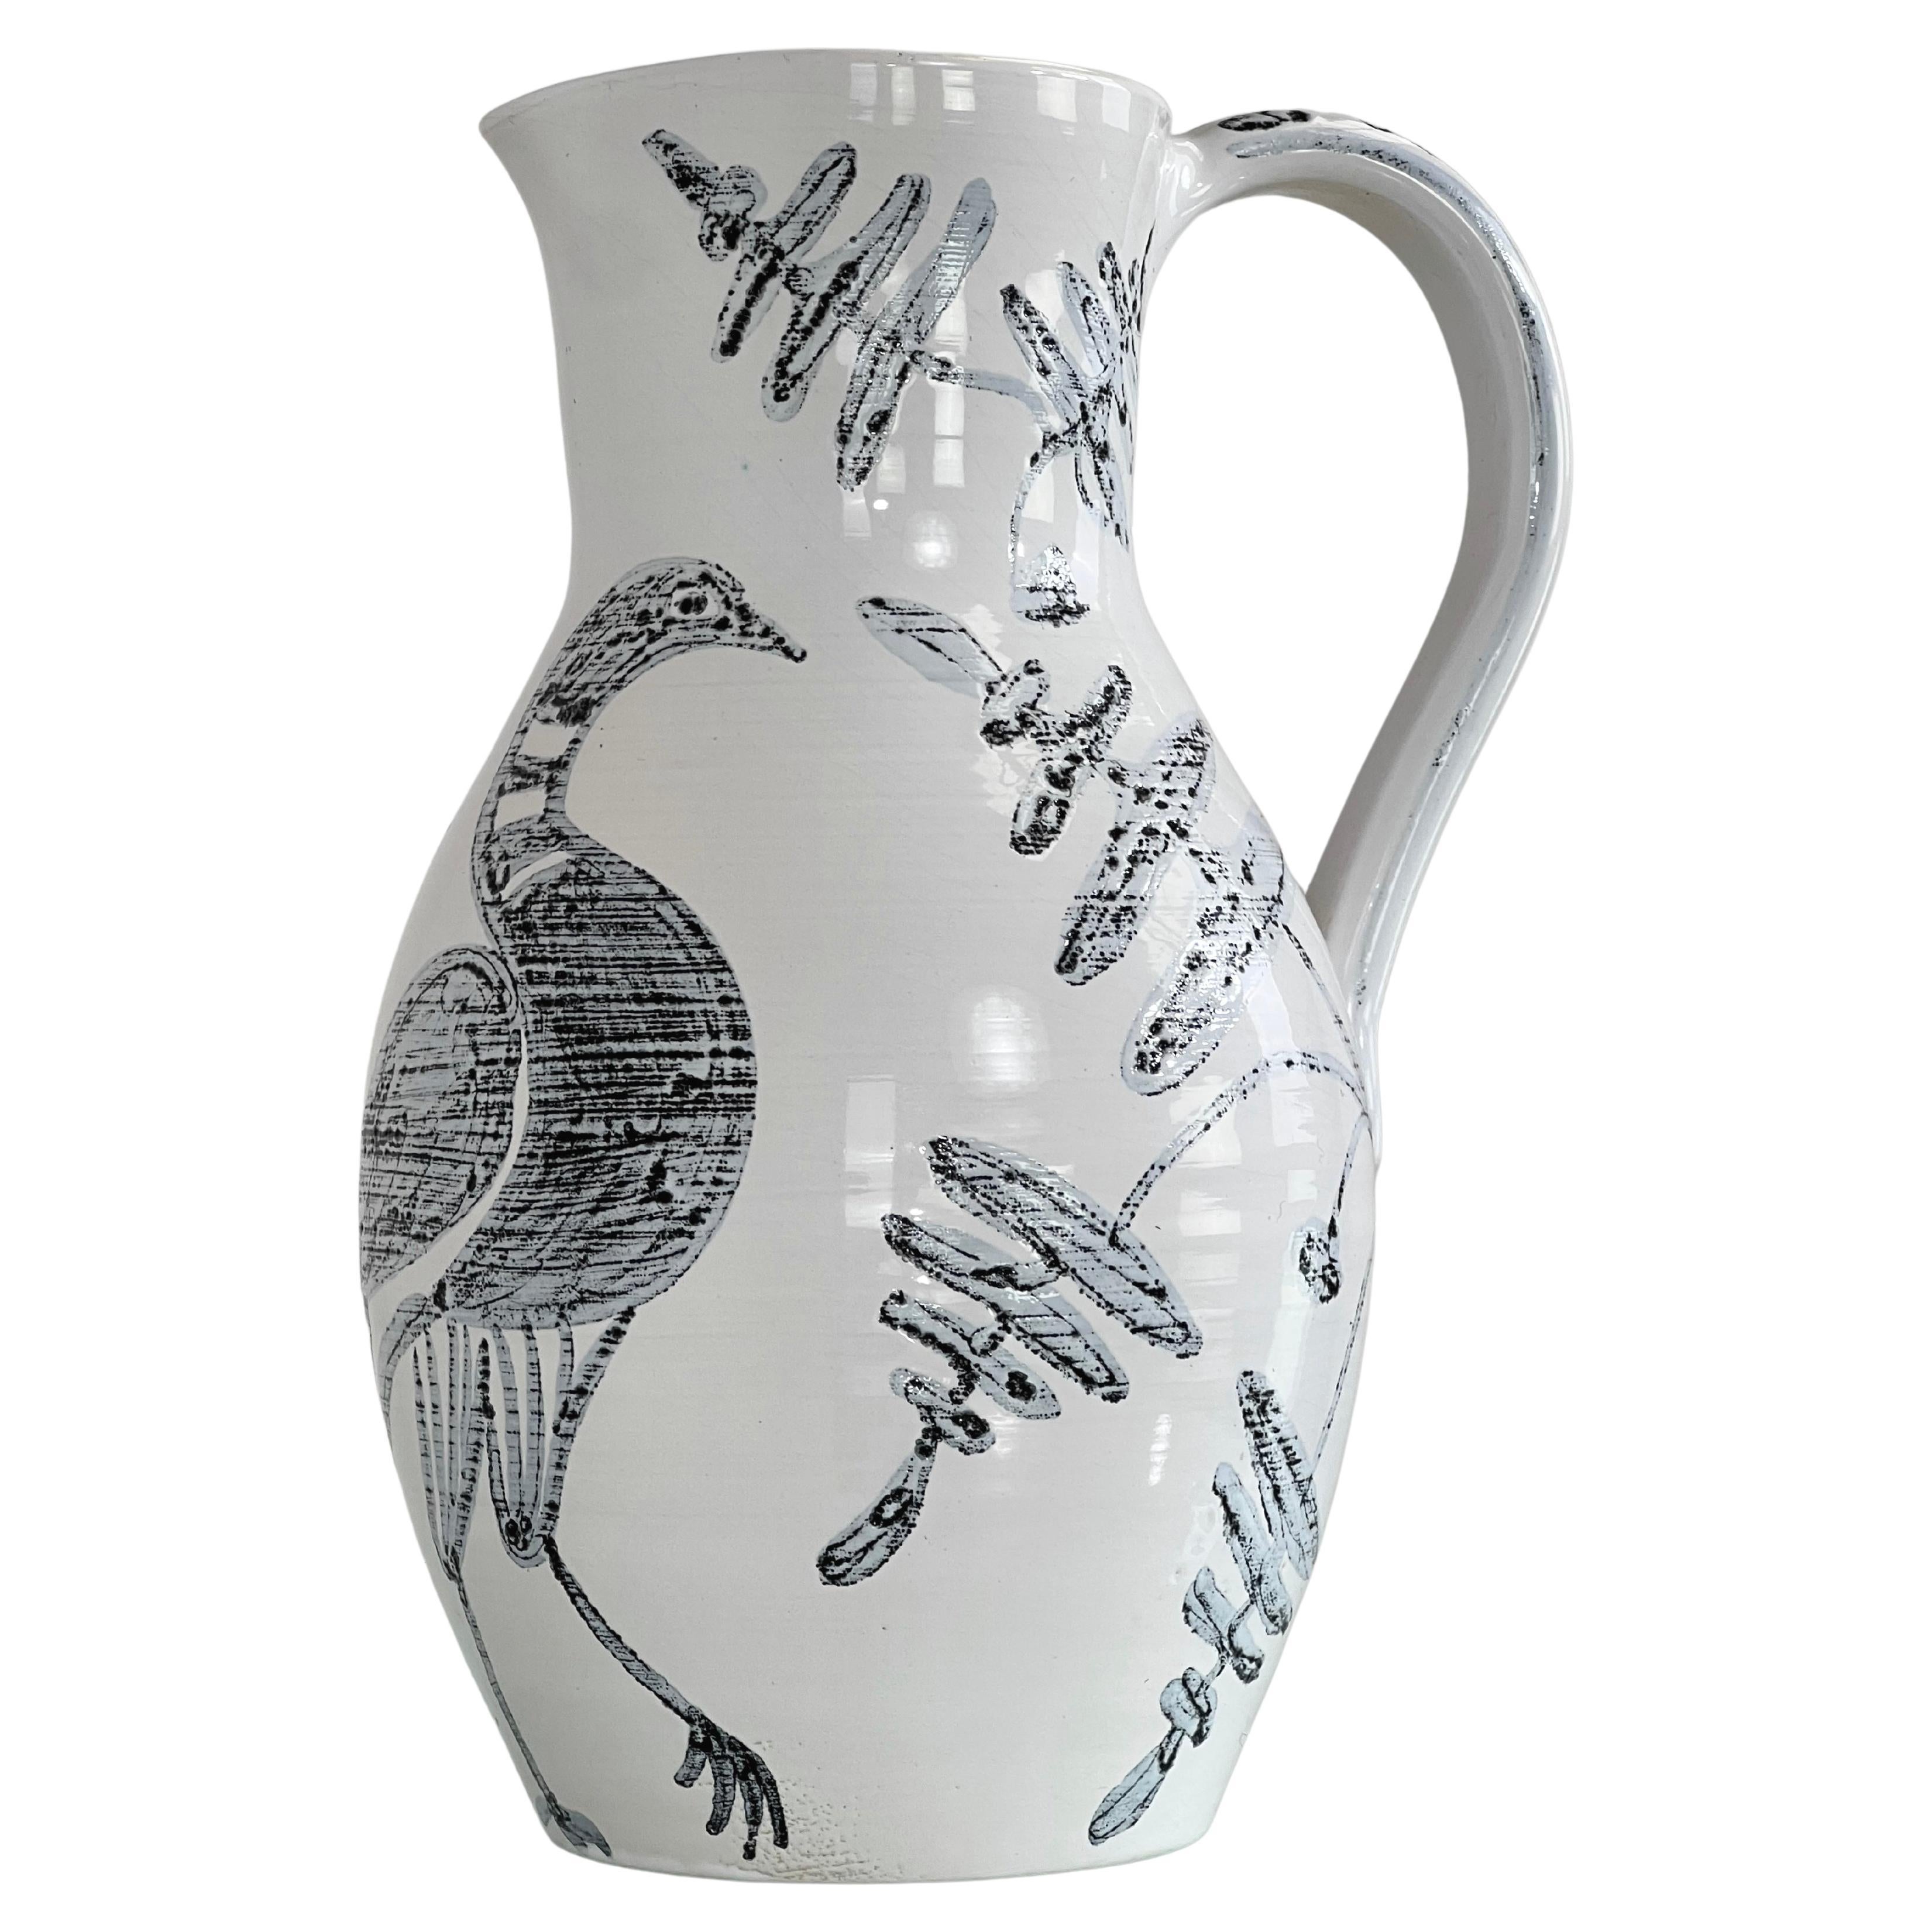 1960s Handmade Ceramic Pitcher Vase For Sale